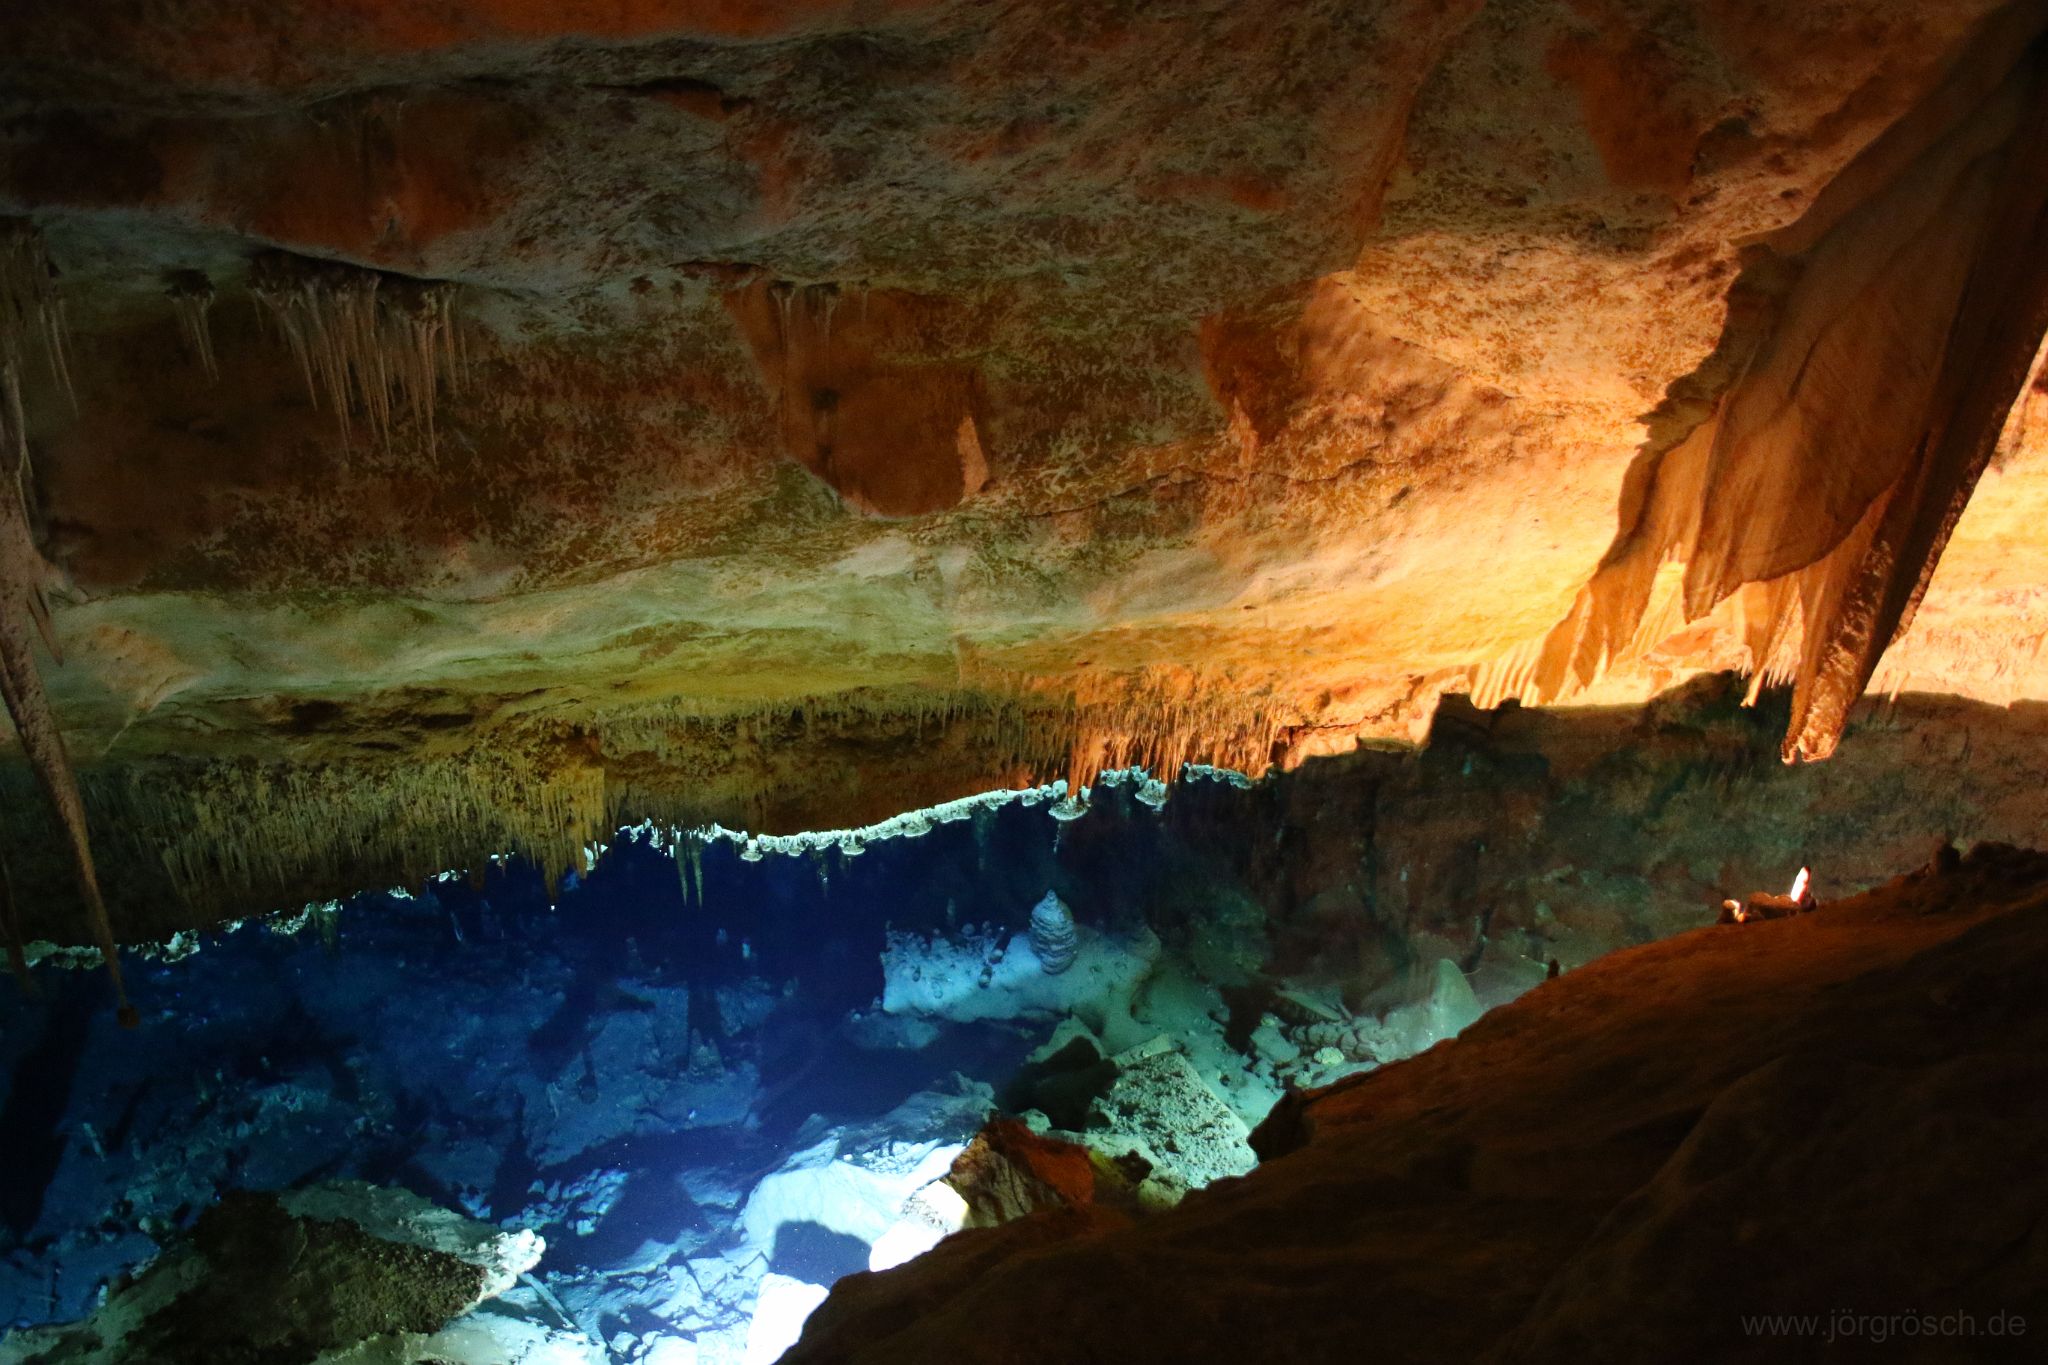 20151028-drachenhoehle-wasser.jpg - Cuevas Drach / Drachenhöhle, Mallorca